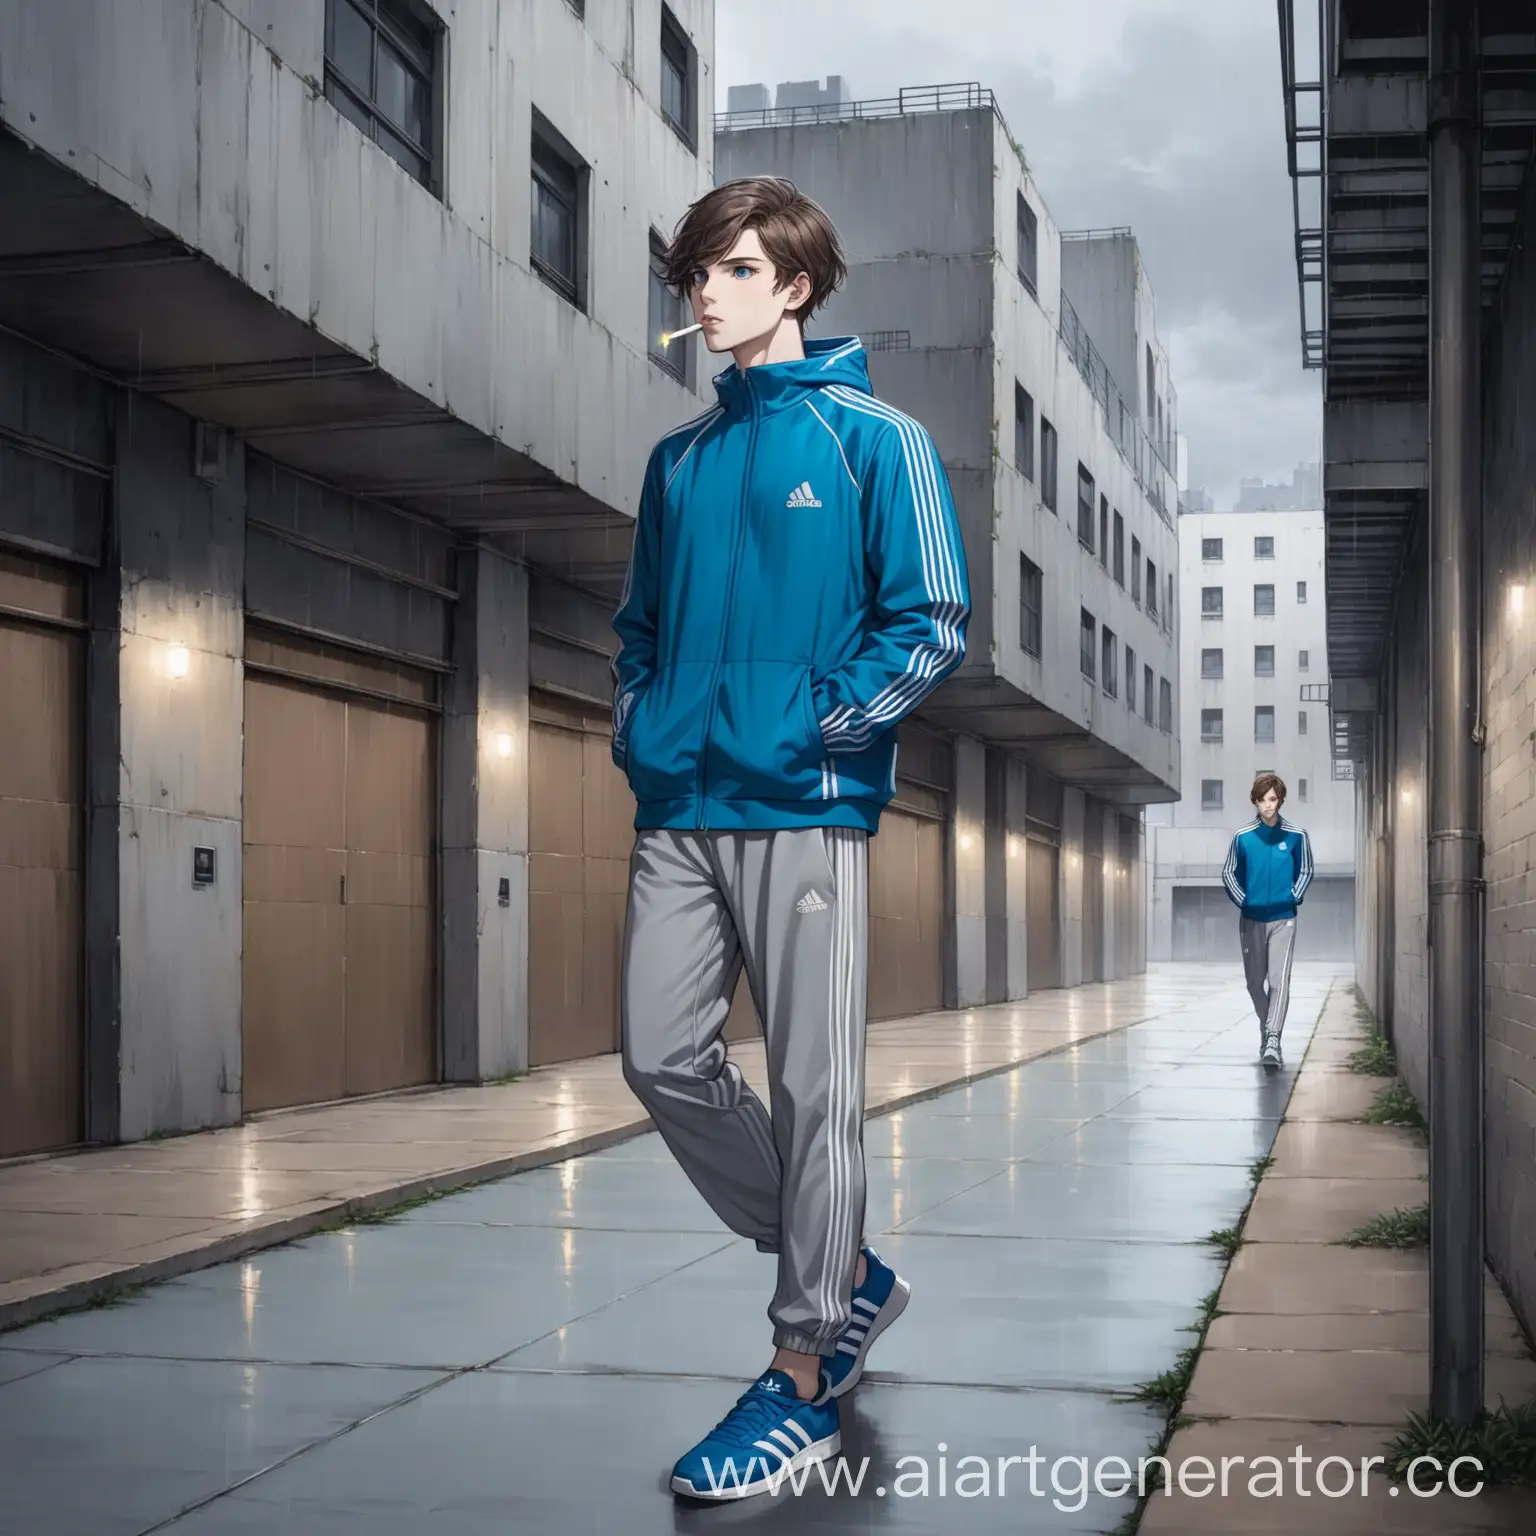 Urban-Young-Man-in-Adidas-Sports-Attire-Strolling-in-Courtyard